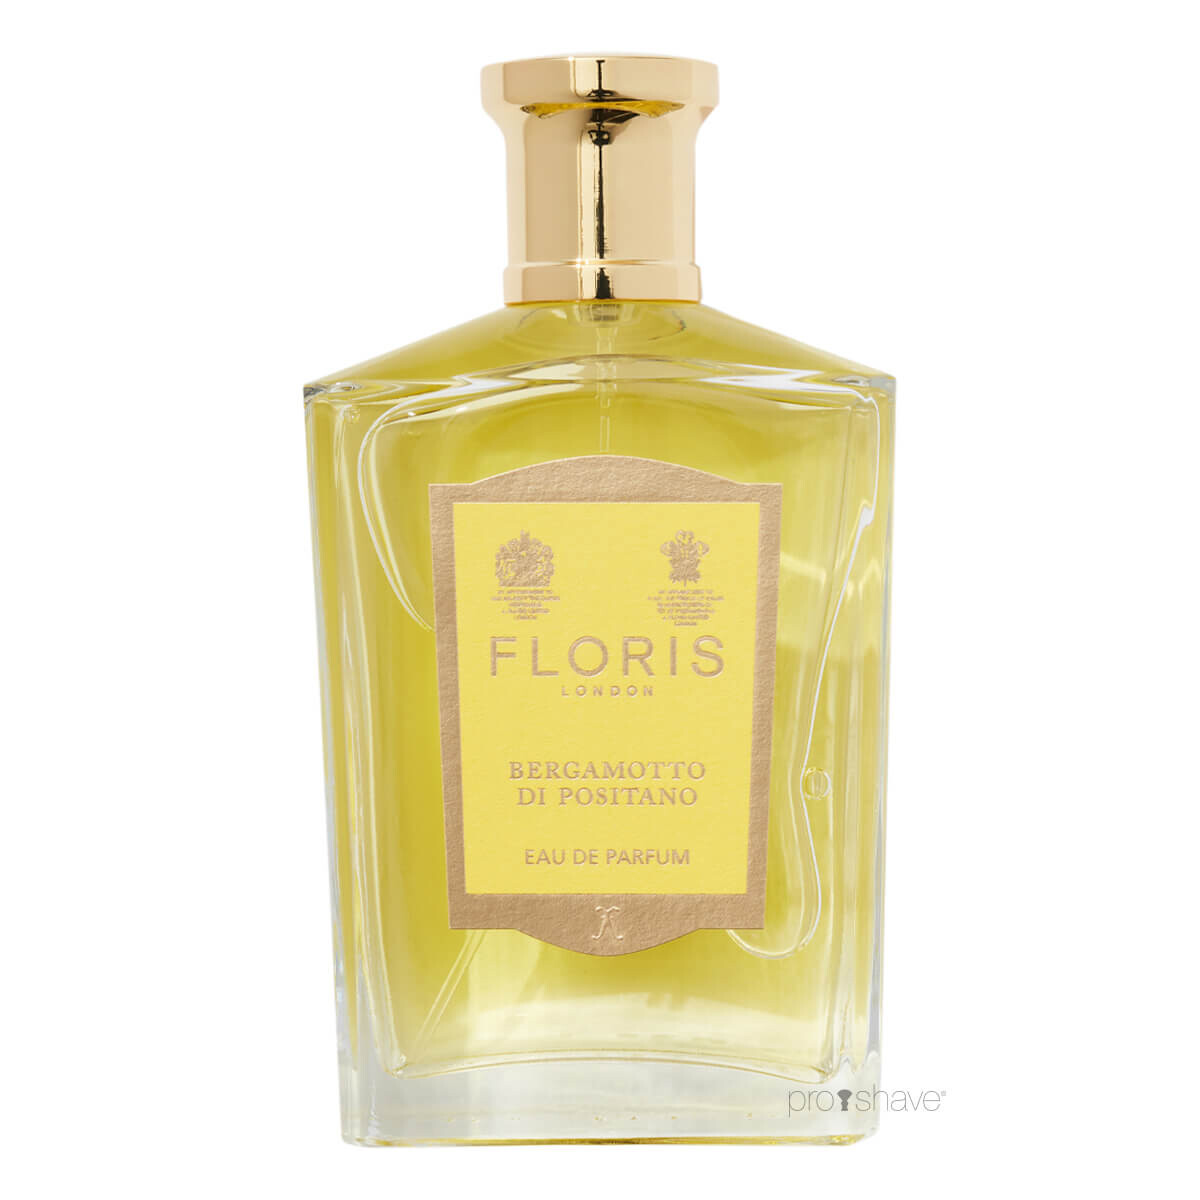 Floris Bergamotto di Positano, Eau de Parfum, 100 ml.